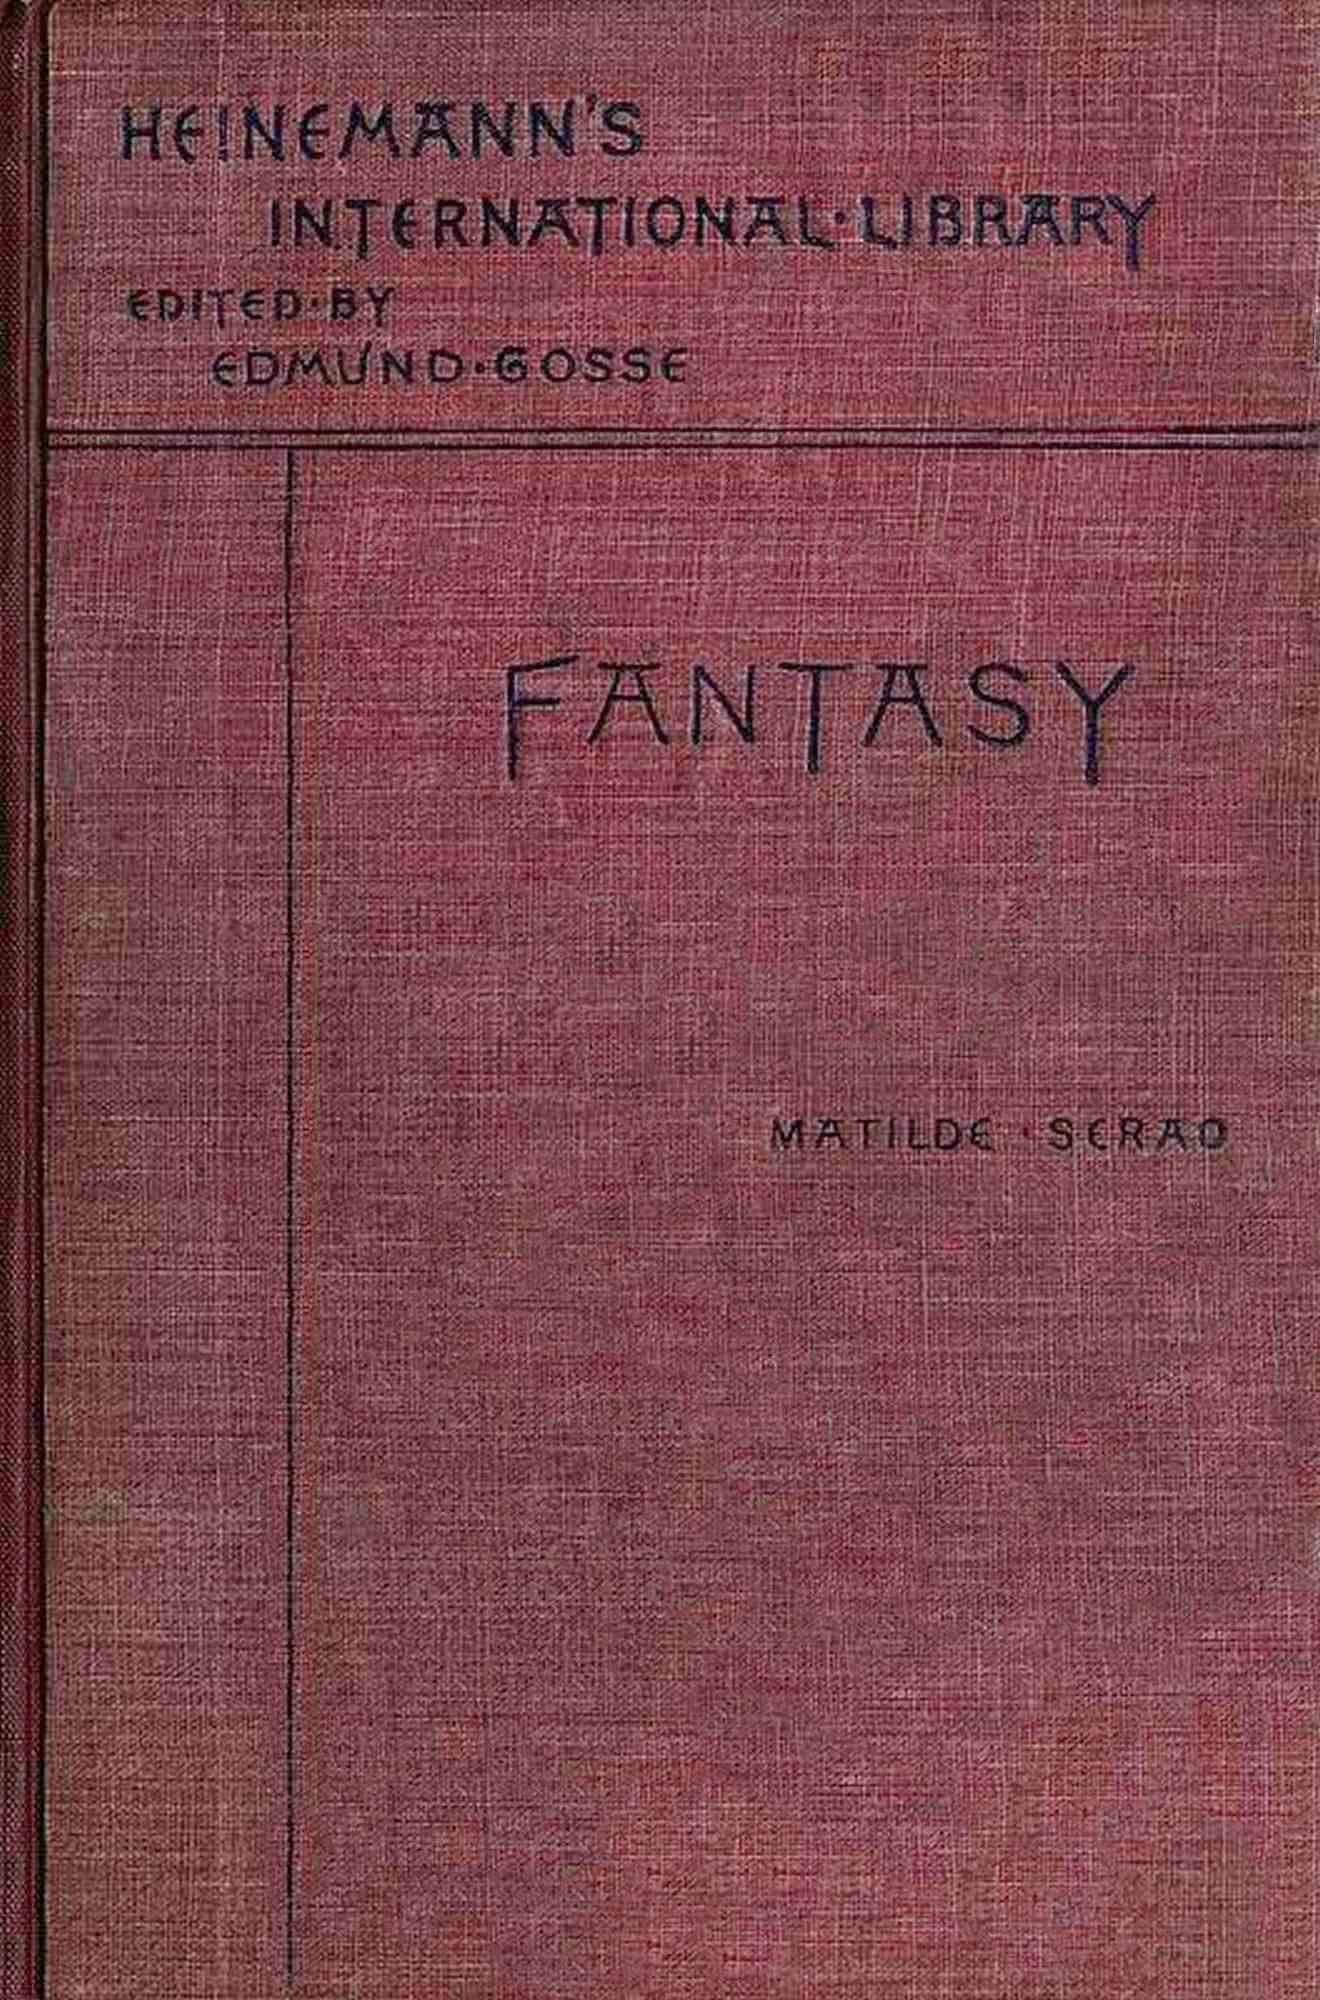 Fantasy, by Matilde Serao—A Project Gutenberg eBook